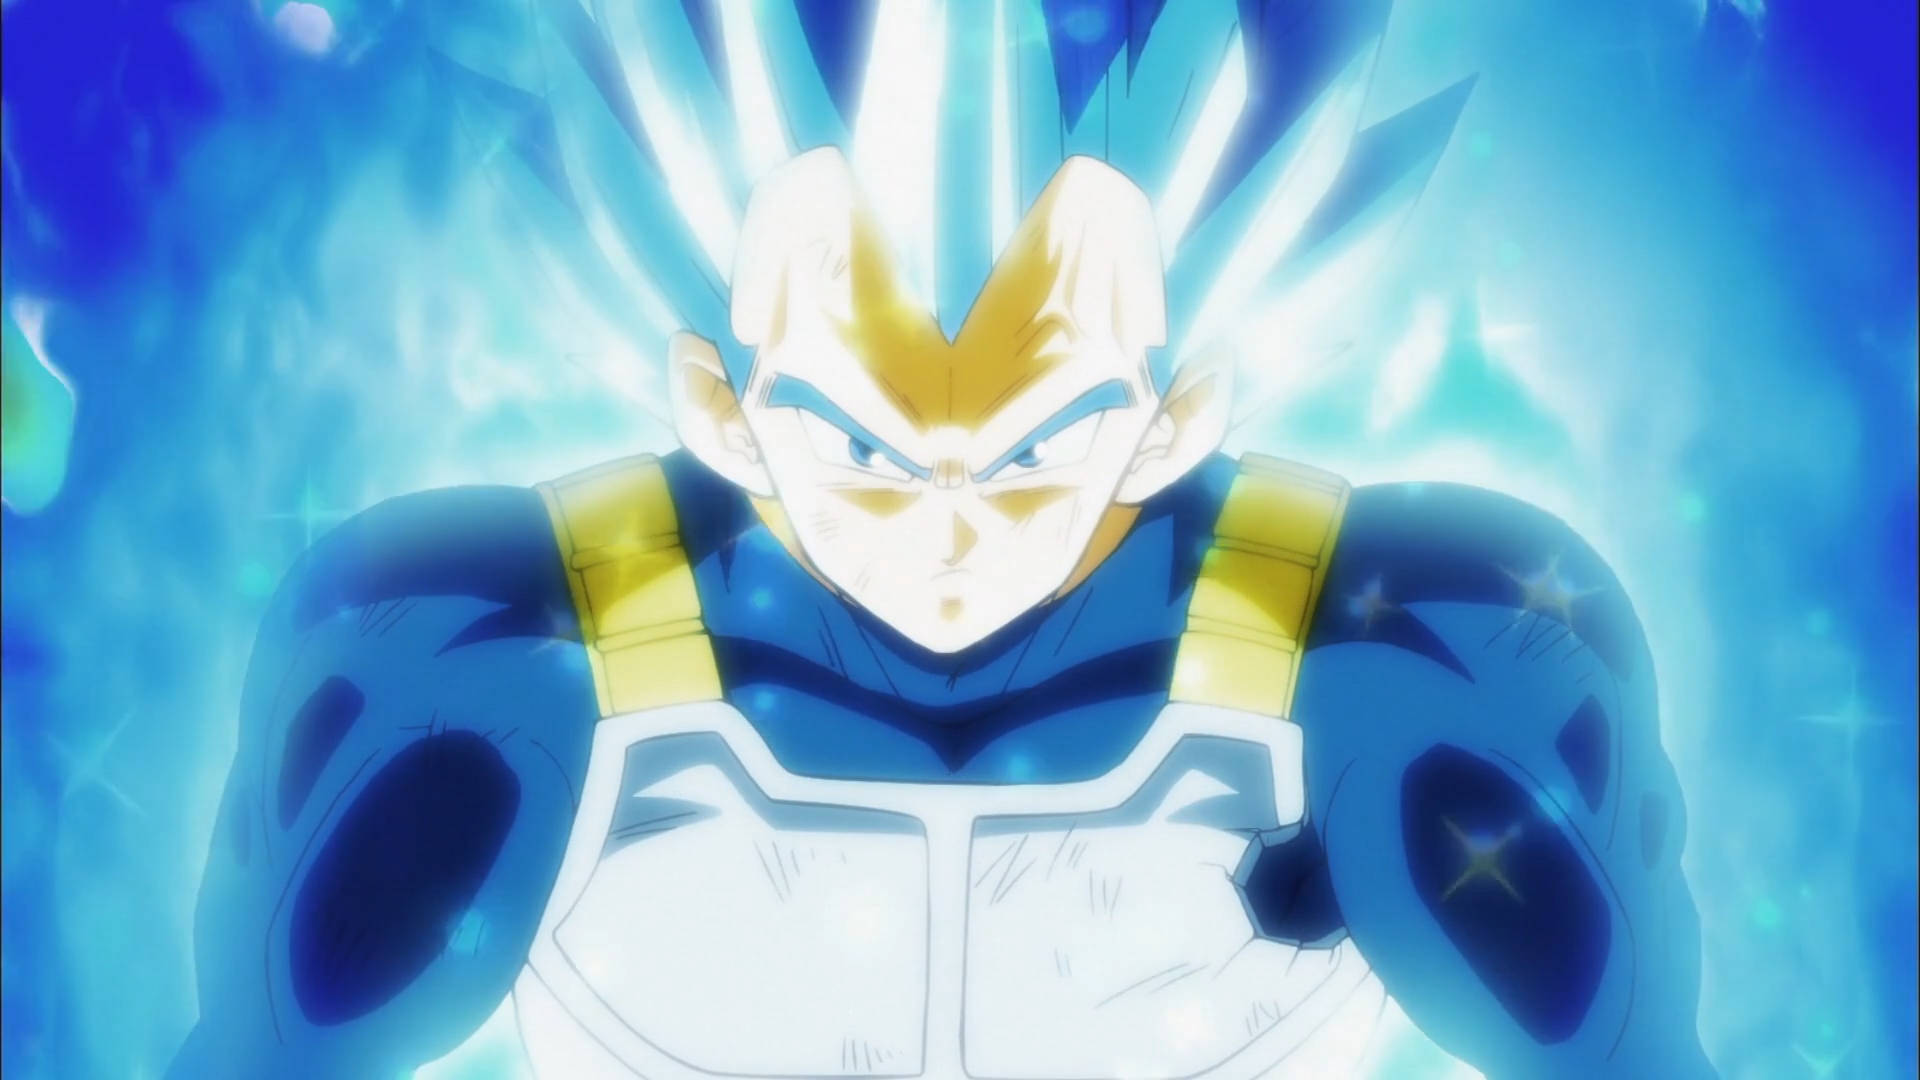 Blue Vegeta Goku Super Saiyan Fierce Aura Background